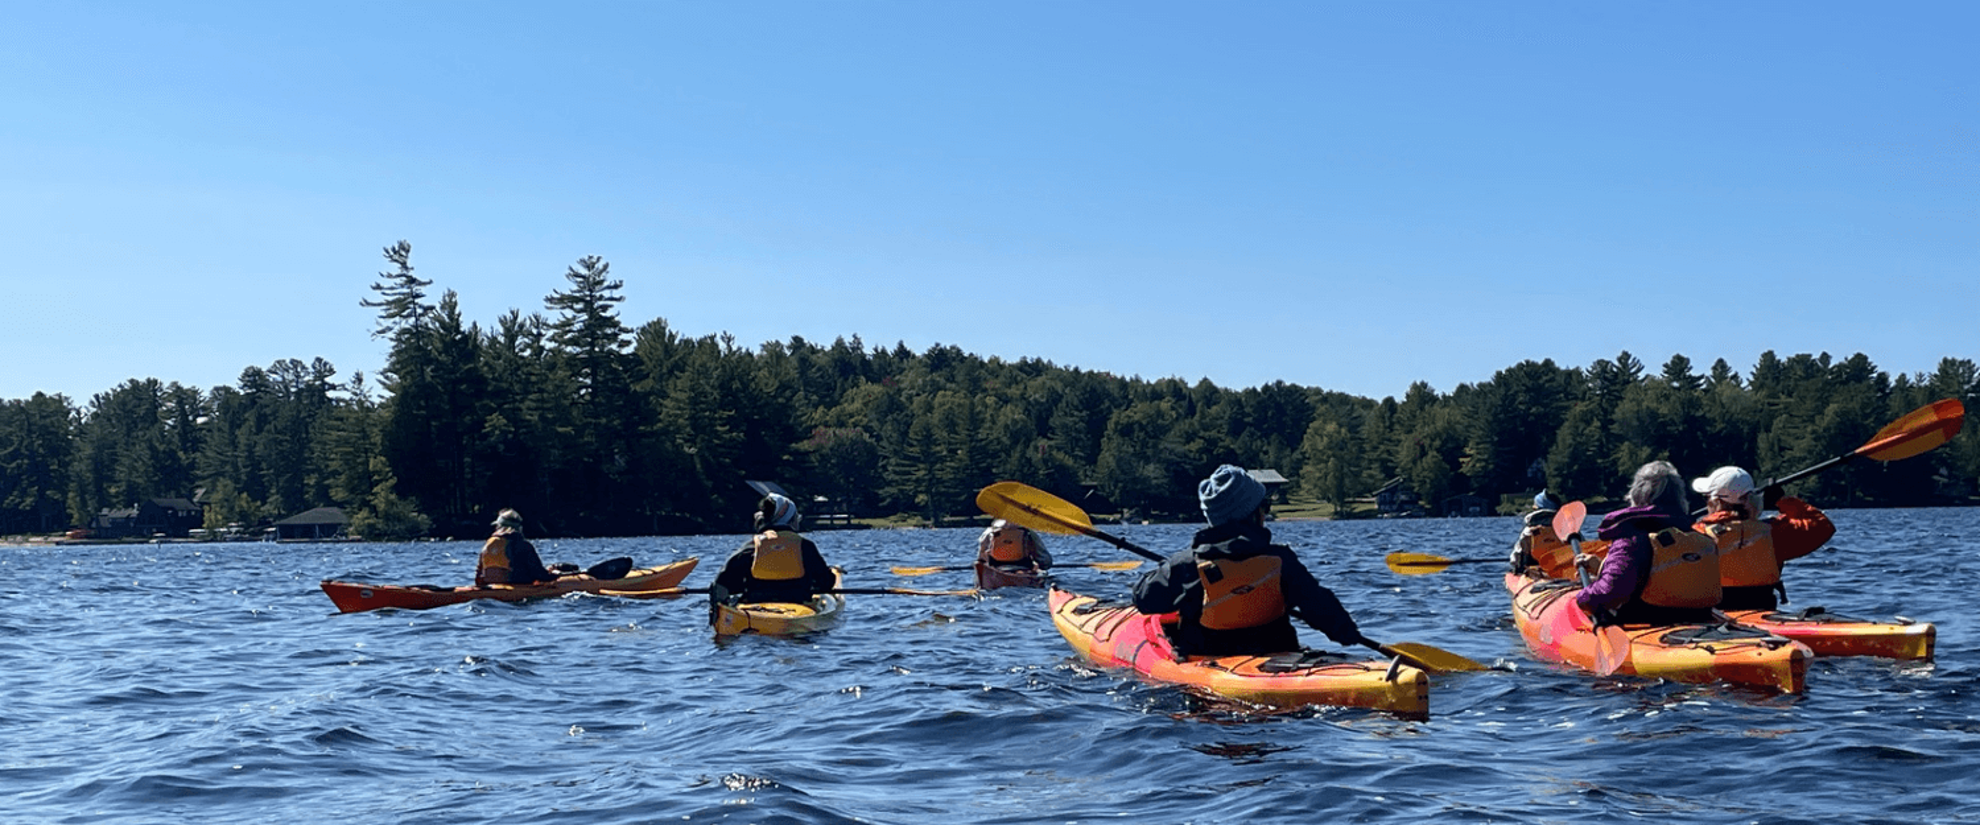 Adventures in the Adirondacks | Hiking and Kayaking Adirondacks State Park, NY